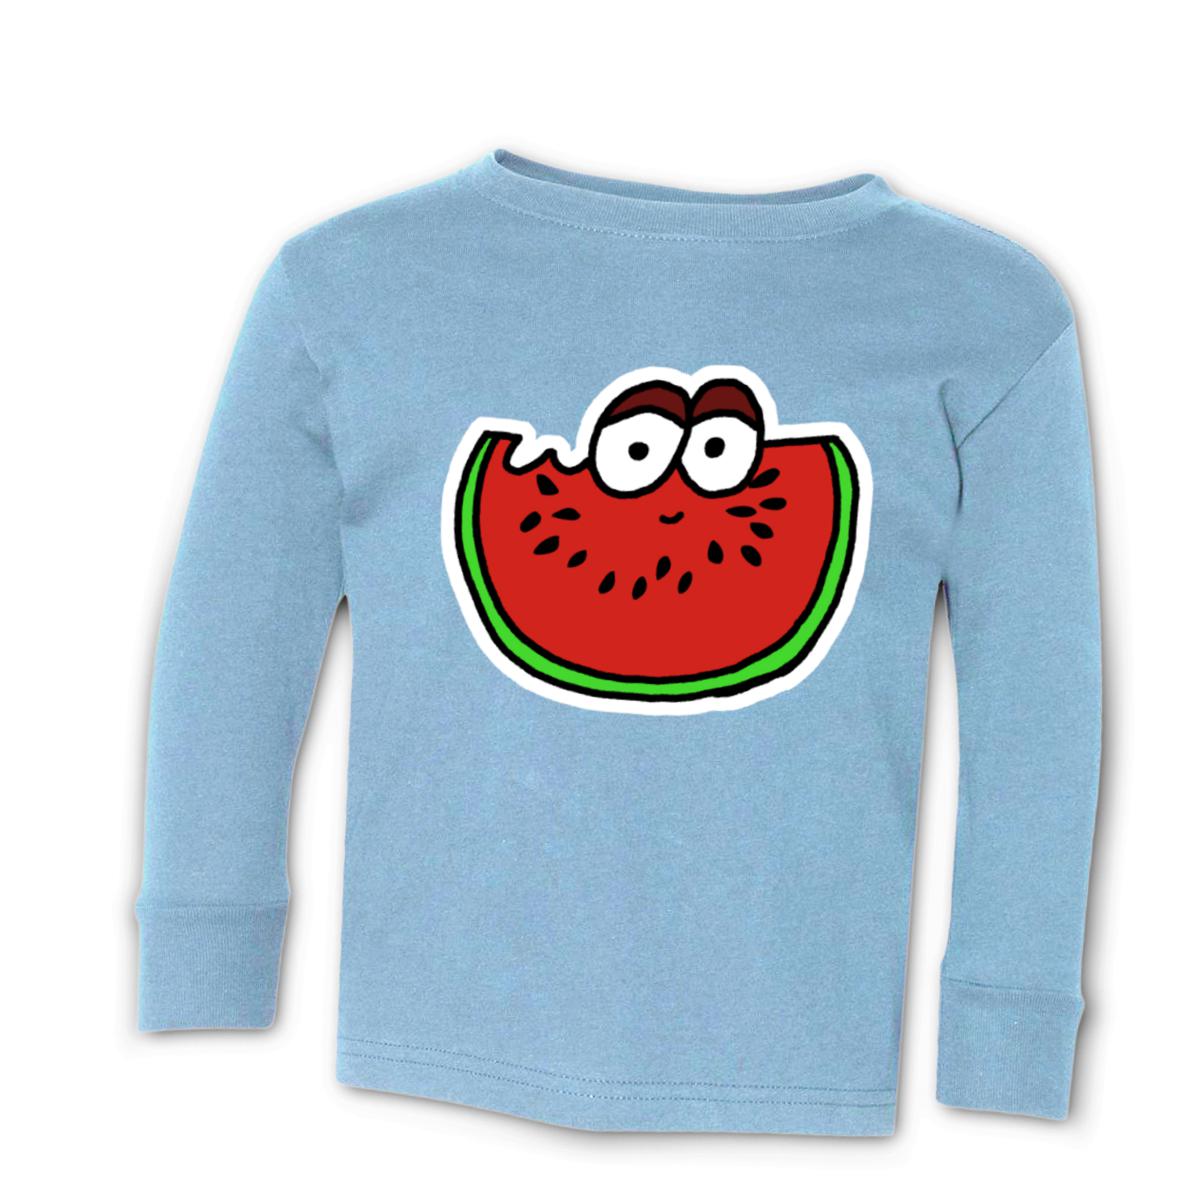 Watermelon Toddler Long Sleeve Tee 4T light-blue